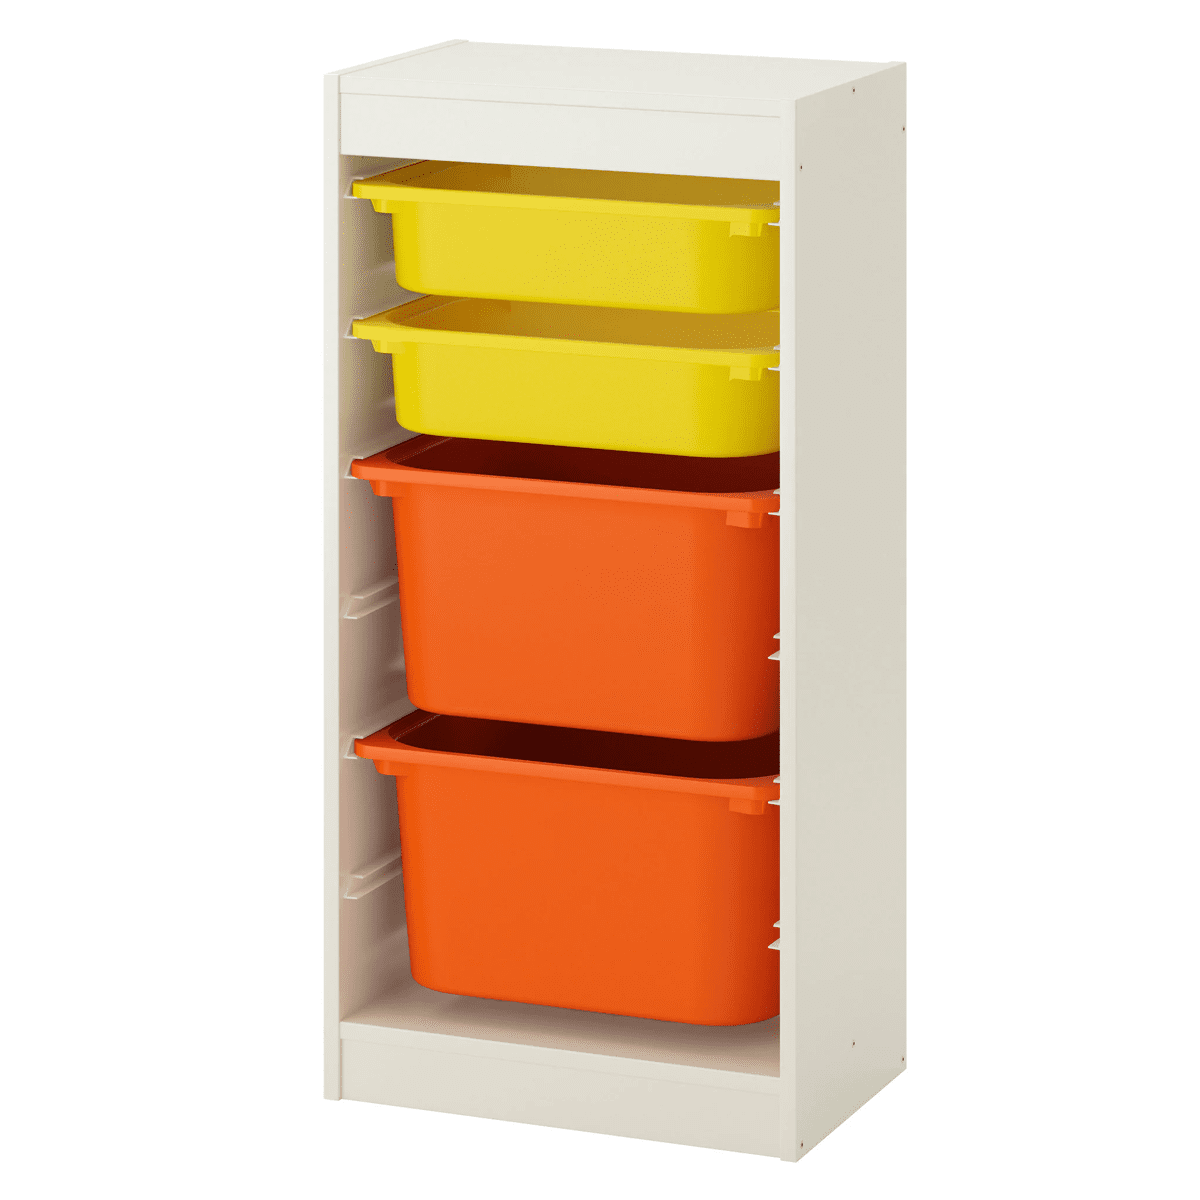 TROFAST Storage combination with boxes, white, yellow orange